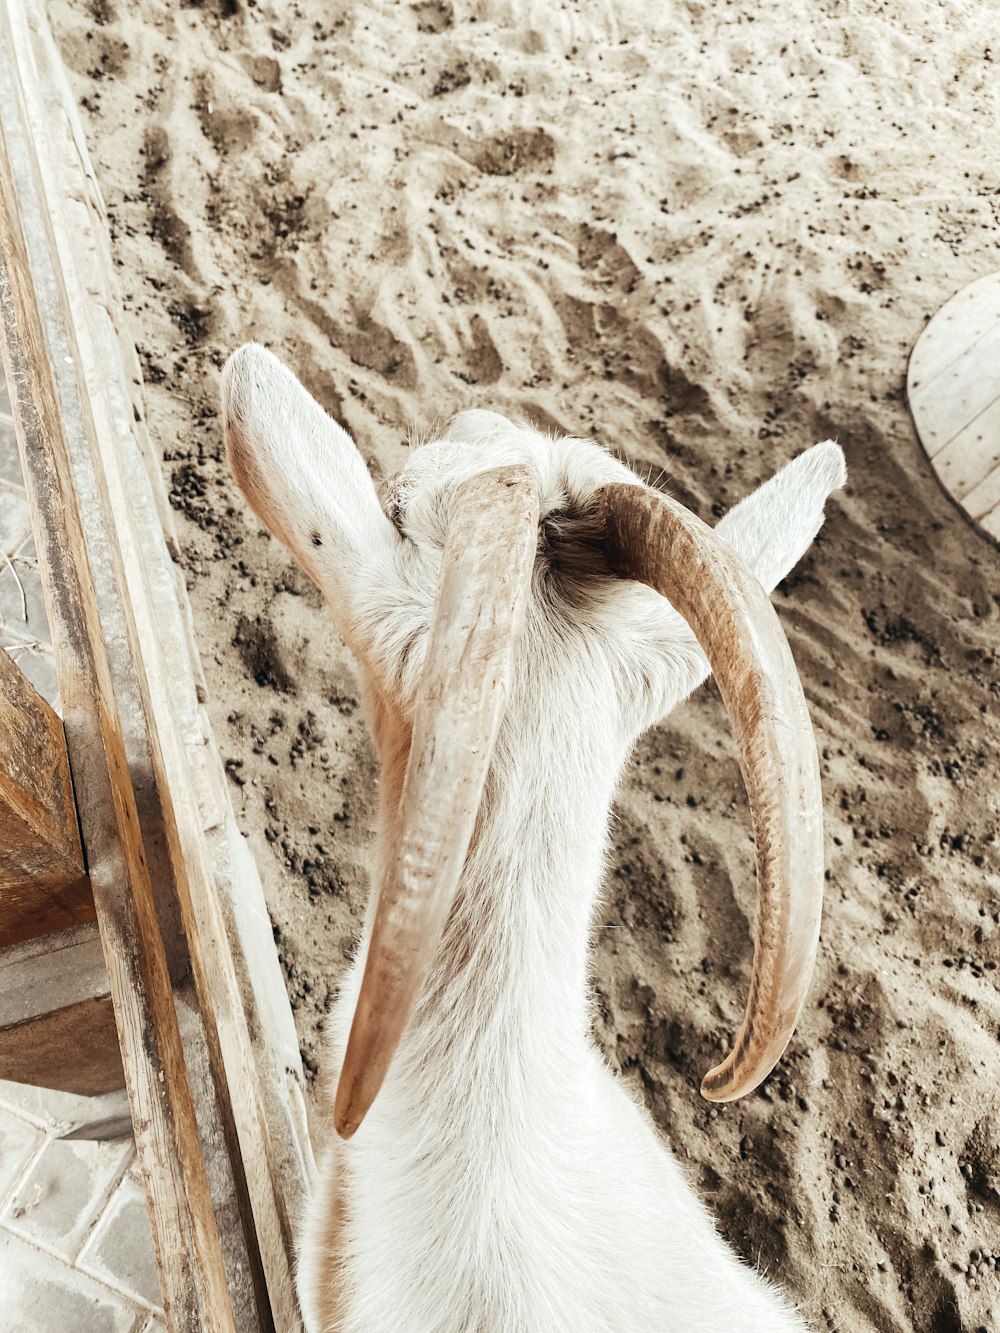 a close up of a goat near a mirror